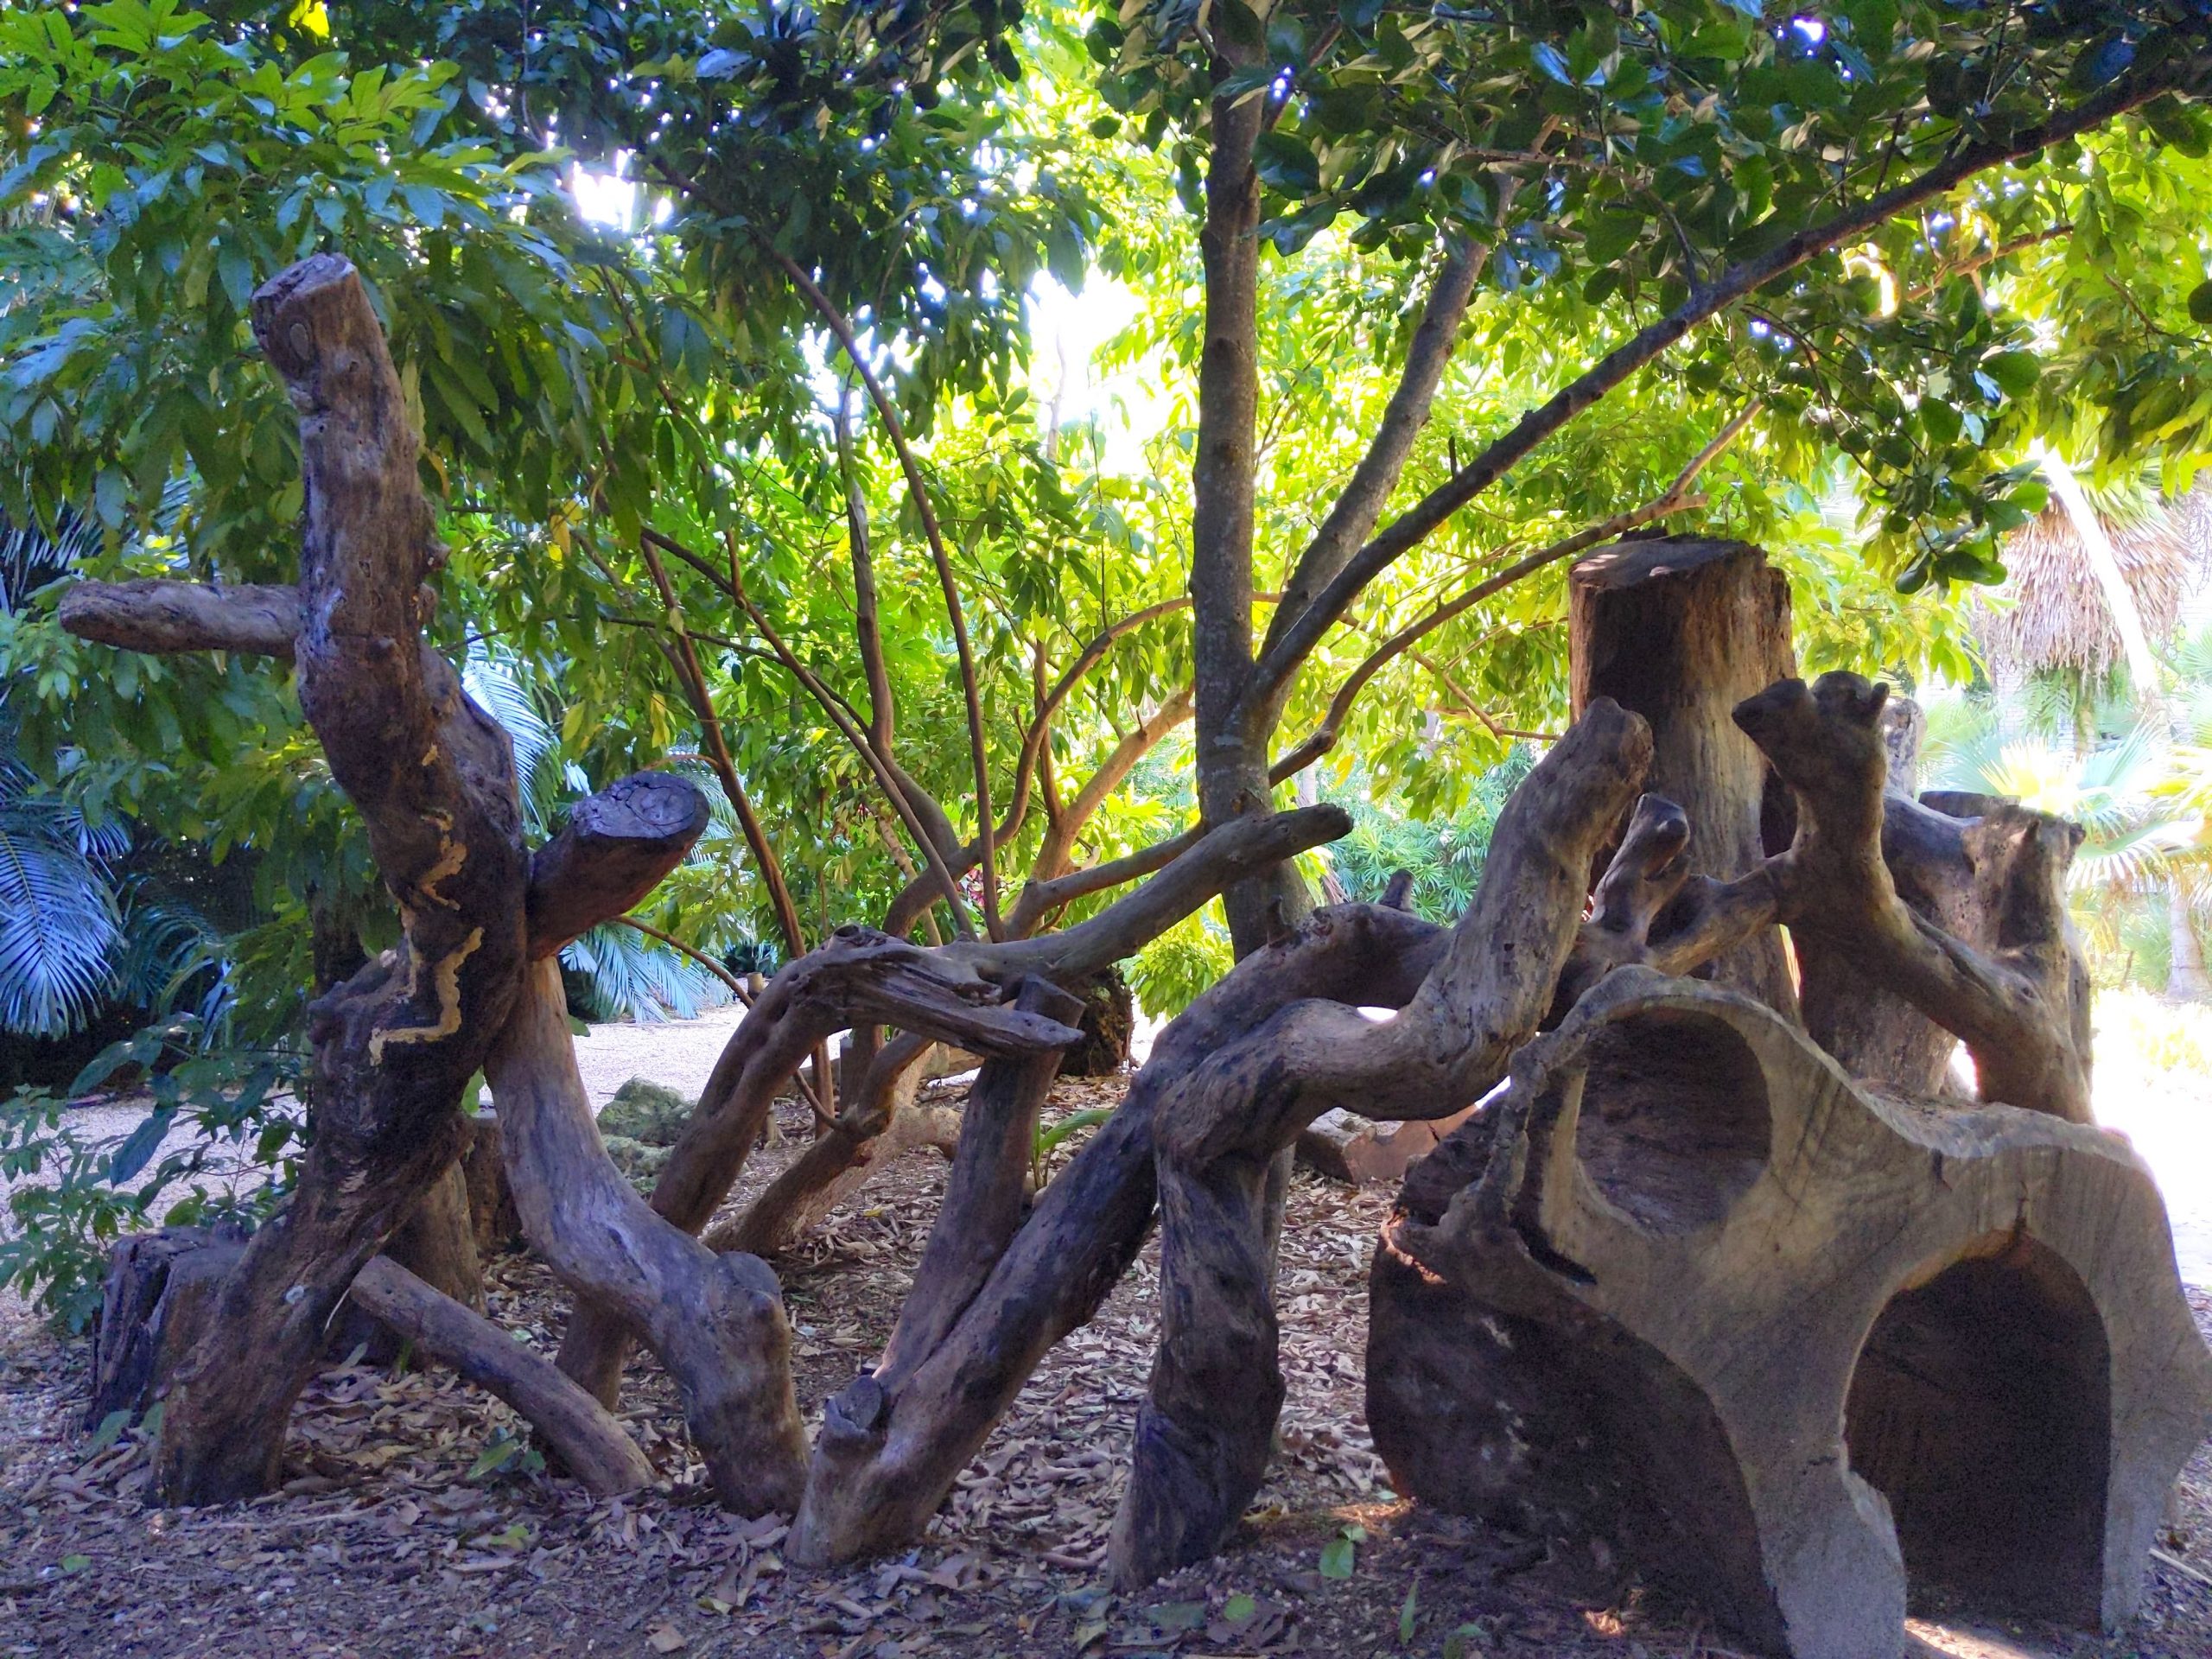 Part of the Children's Garden at Fairchild Tropical Botanical Garden